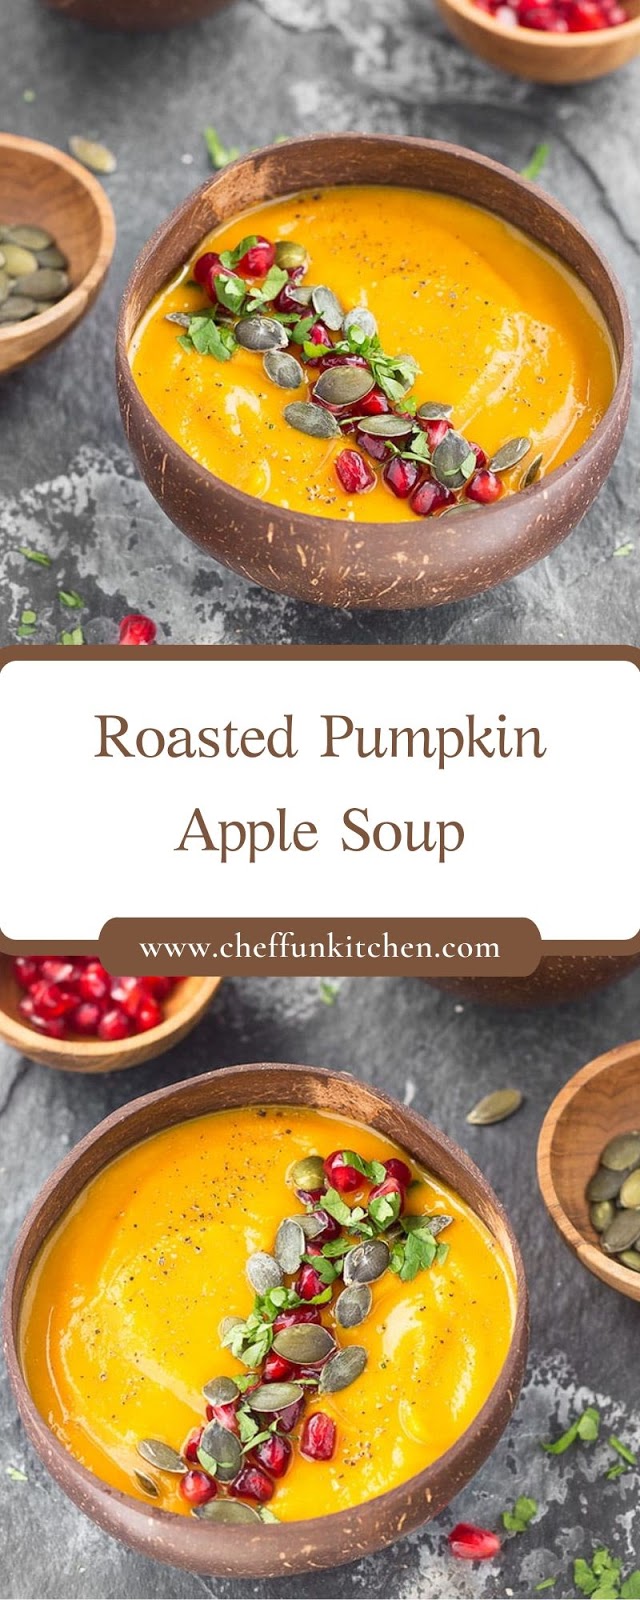 Roasted Pumpkin Apple Soup